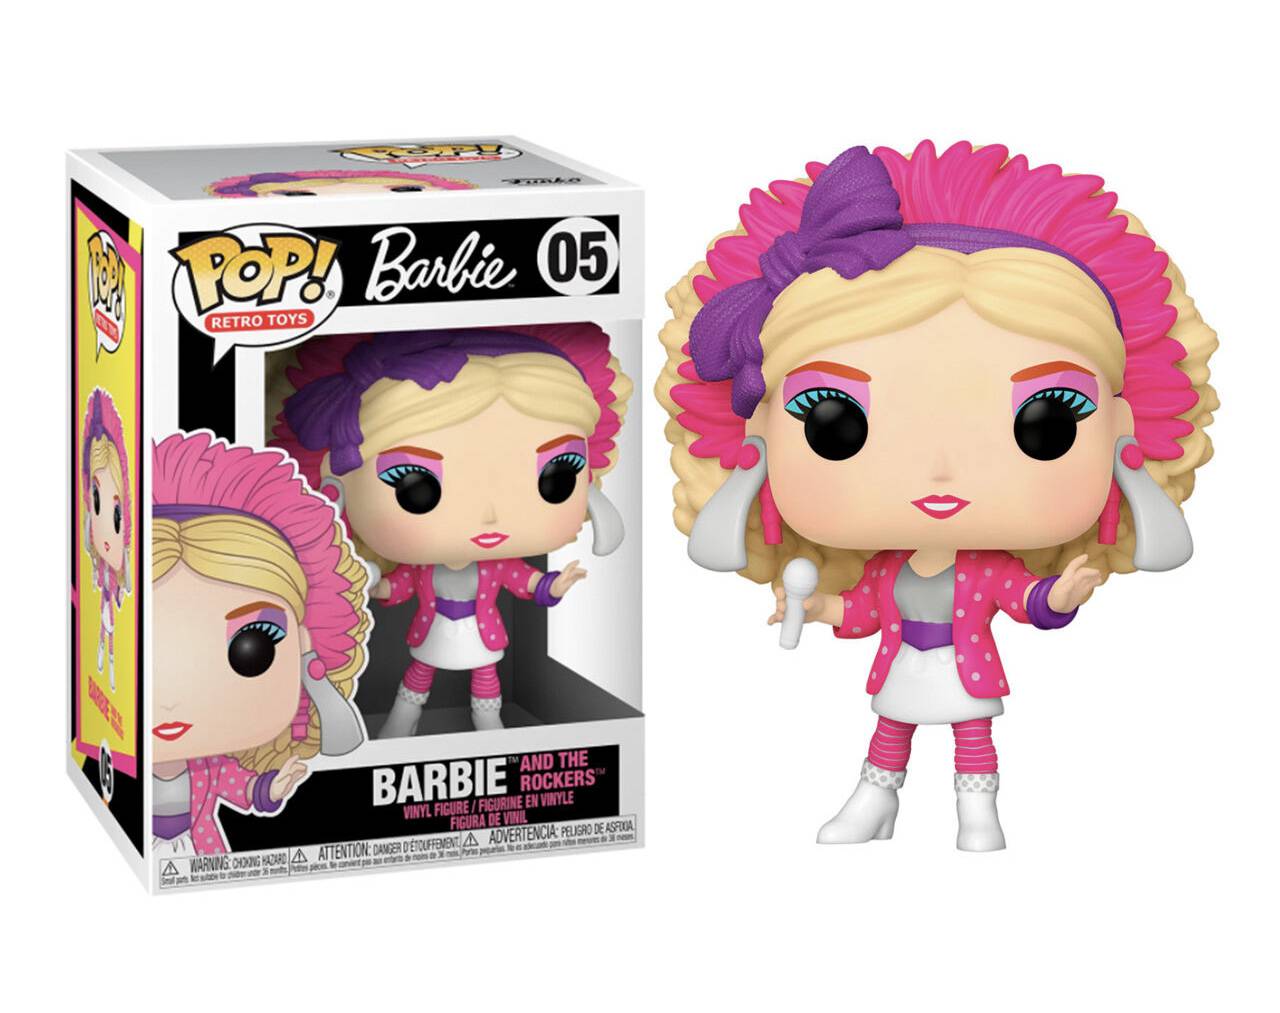 Barbie and the Rockers Pop! Vinyl